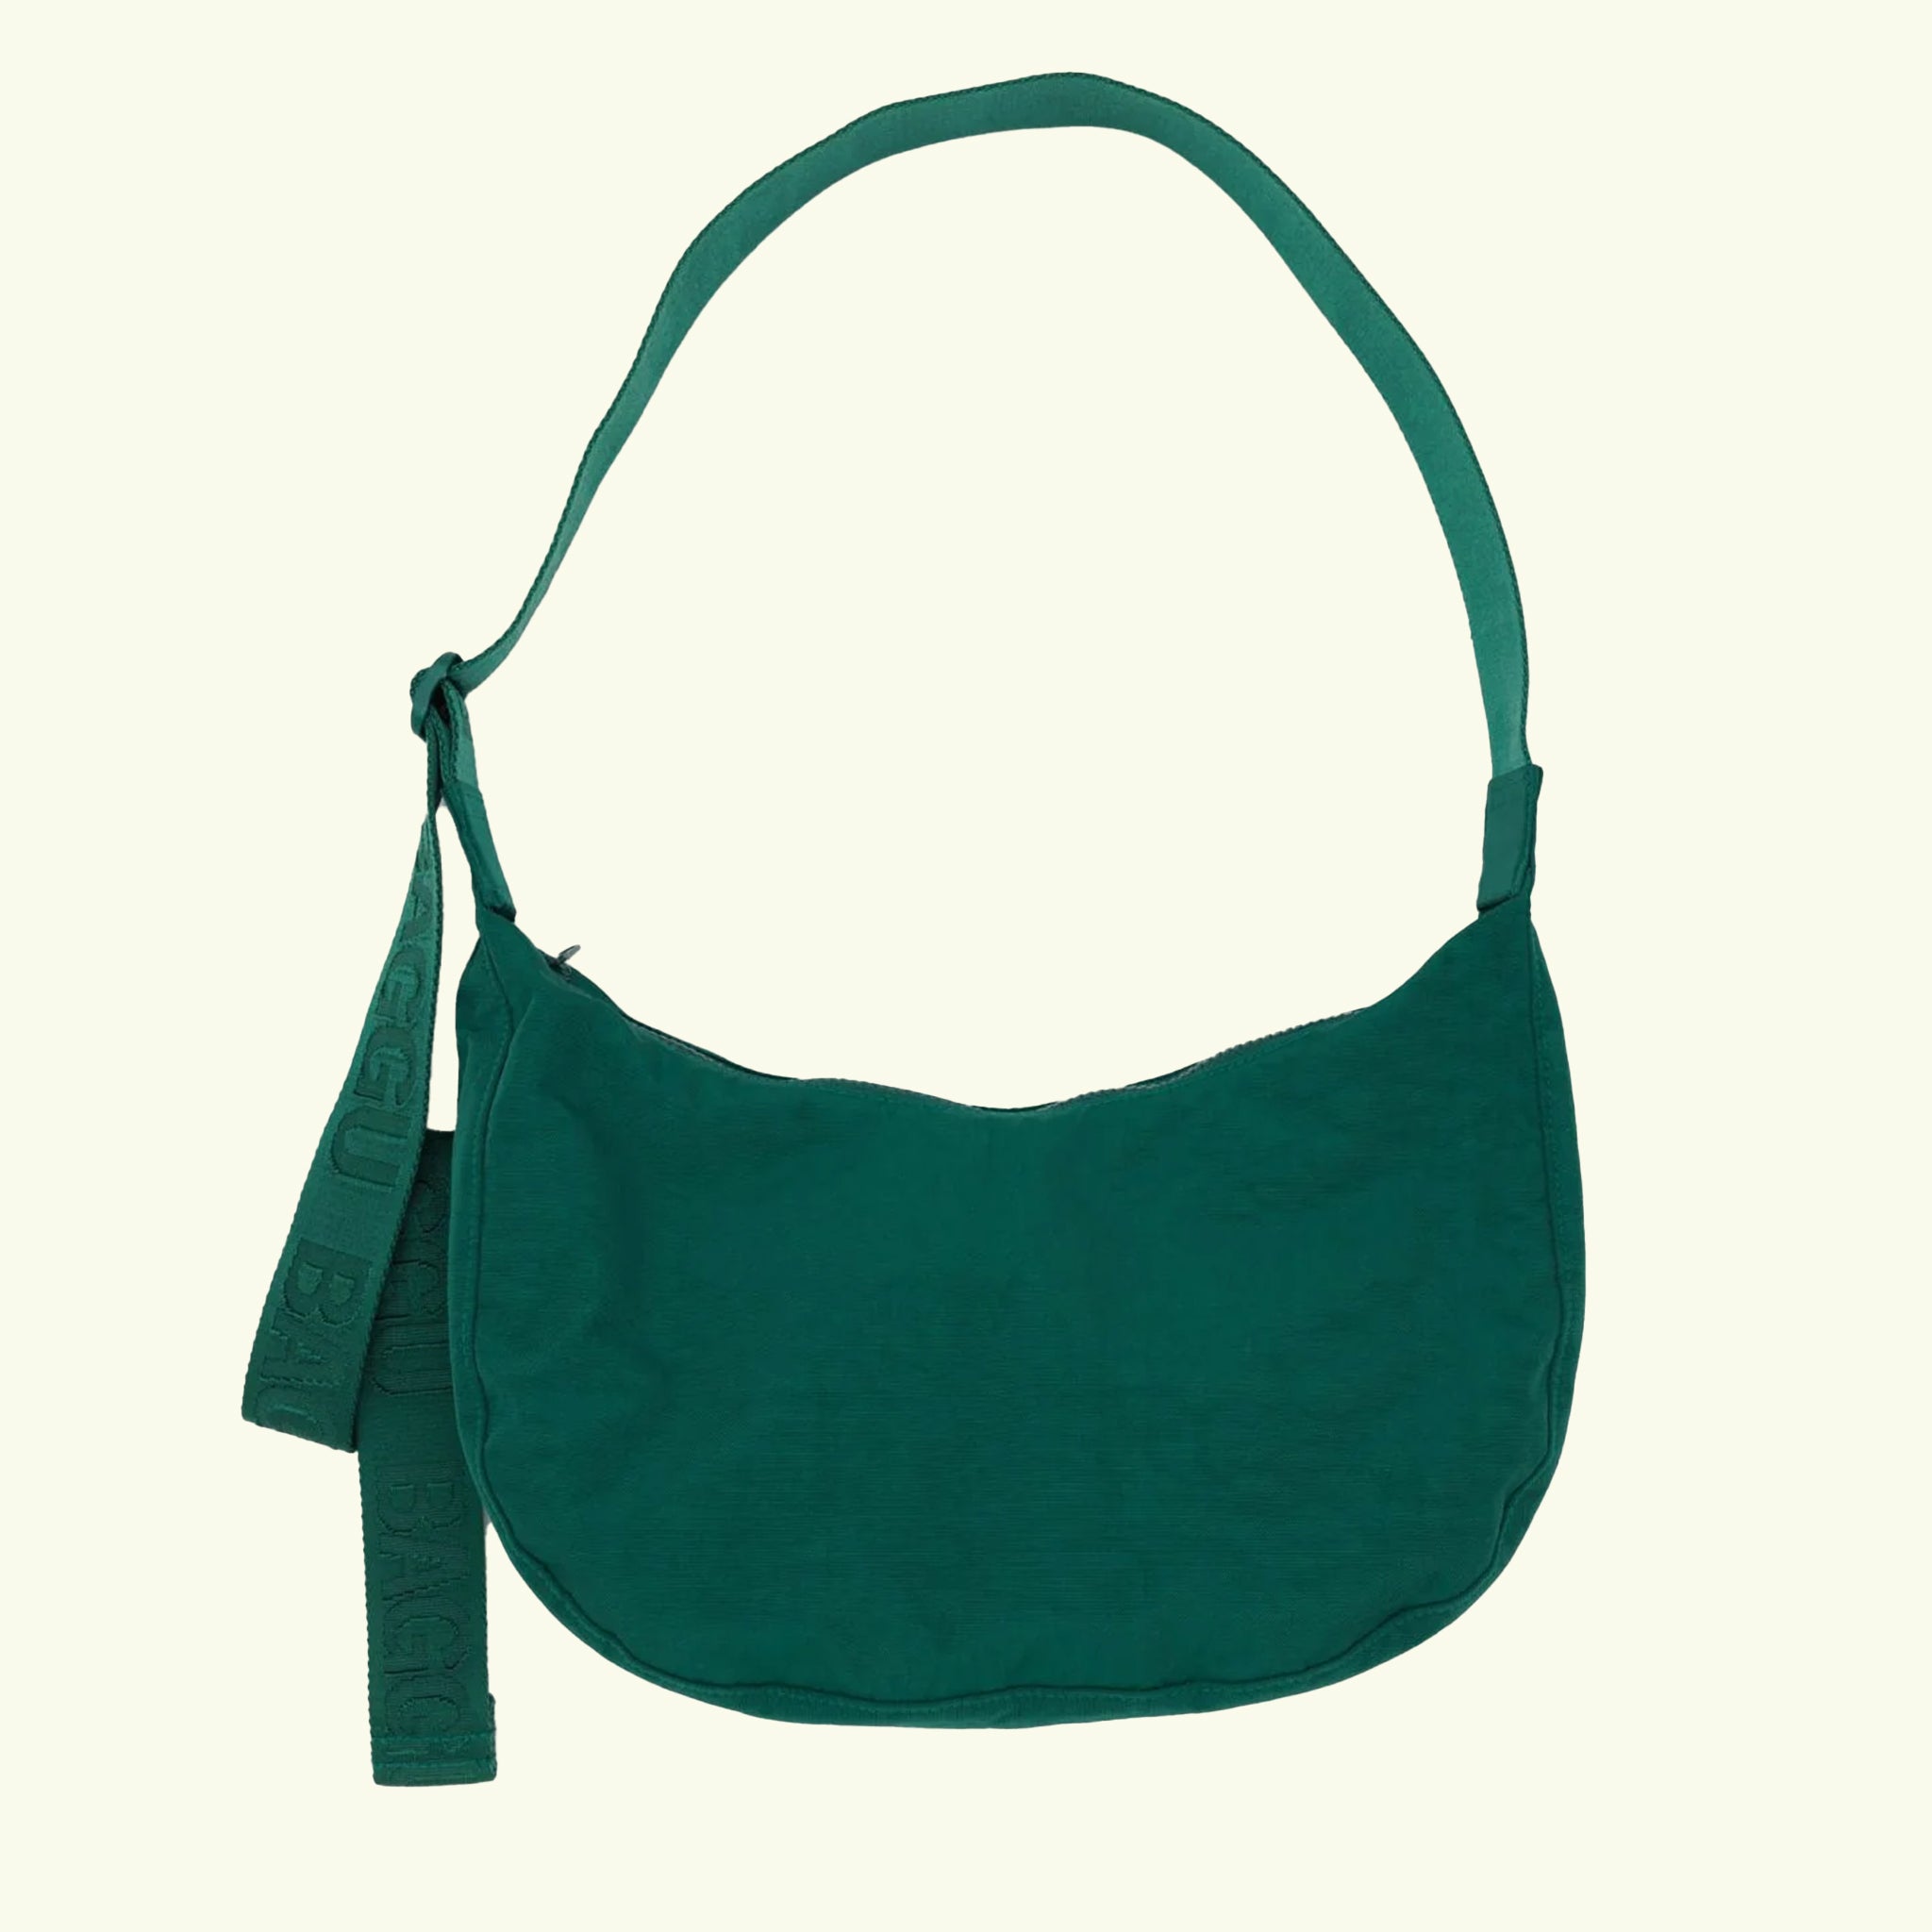 A dark green nylon handbag with a adjustable strap.